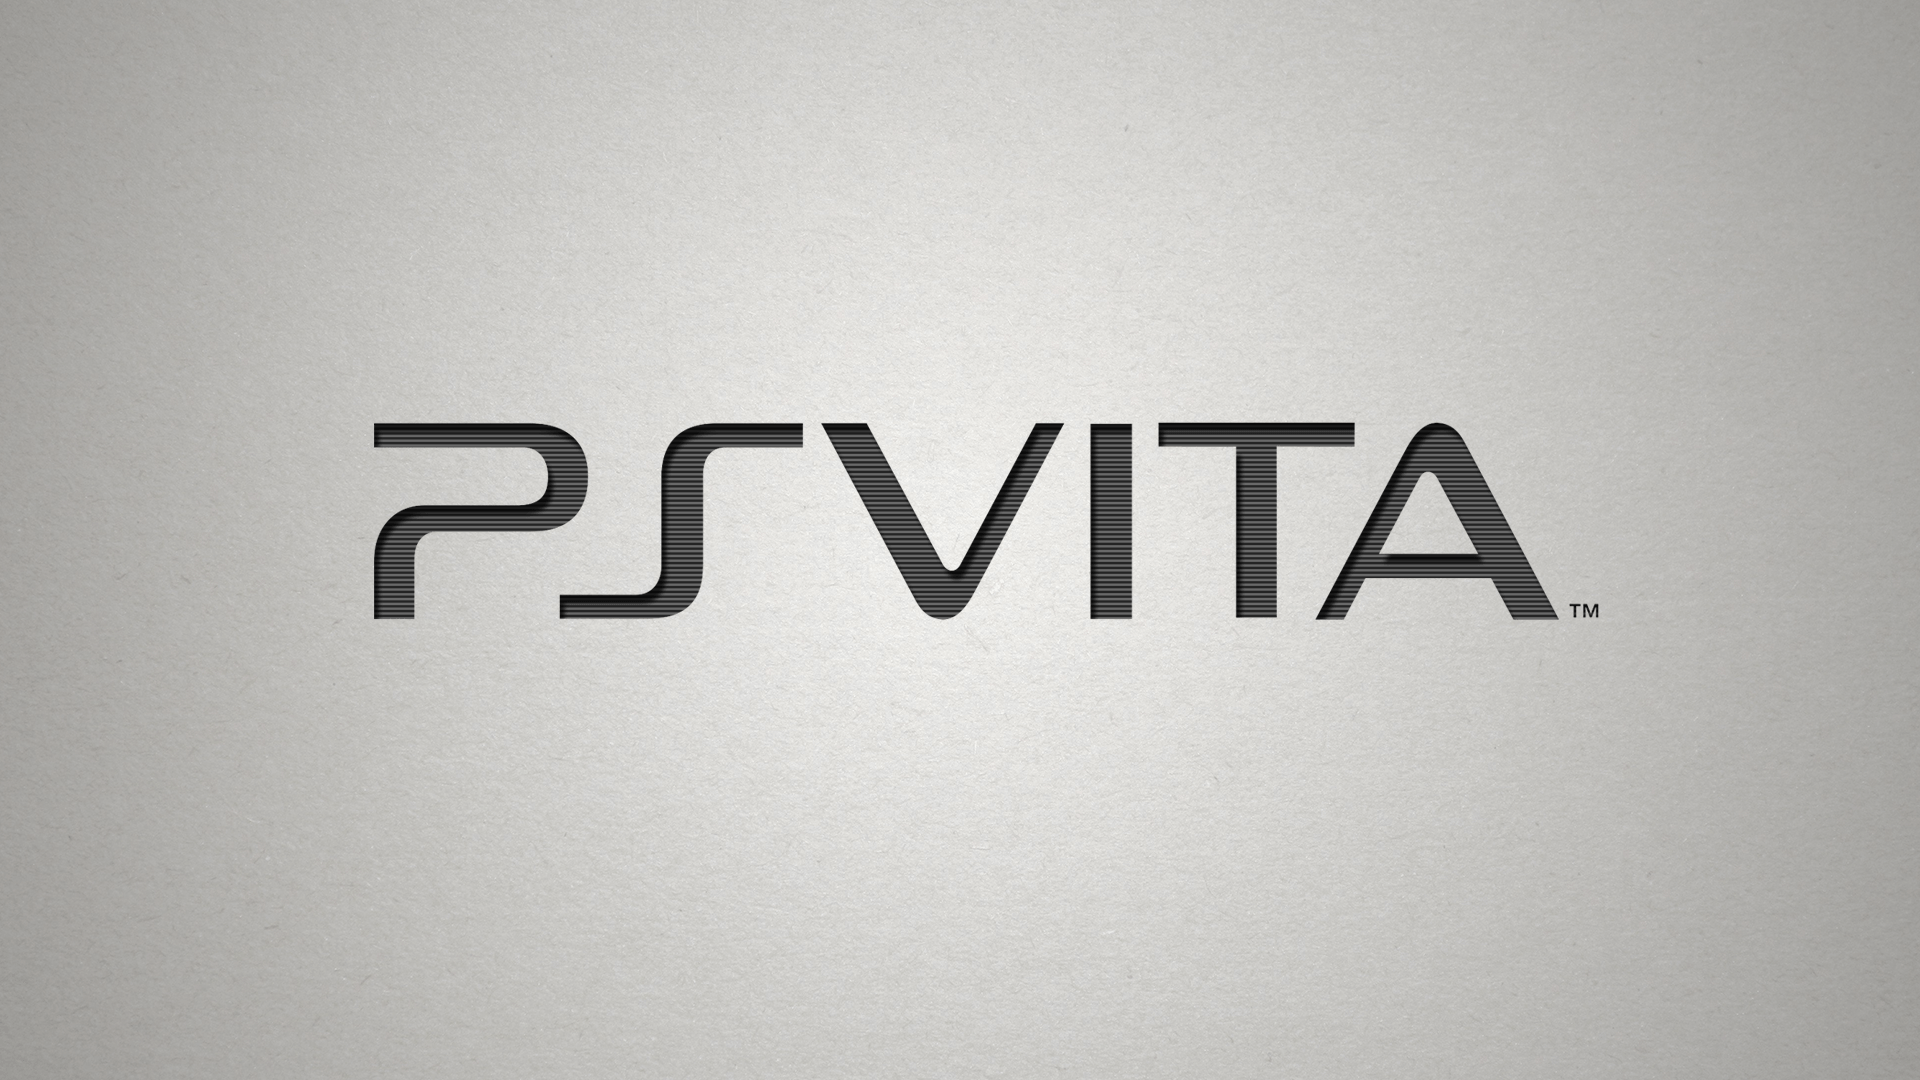 PlayStation Vita HD Wallpaper and Background Image